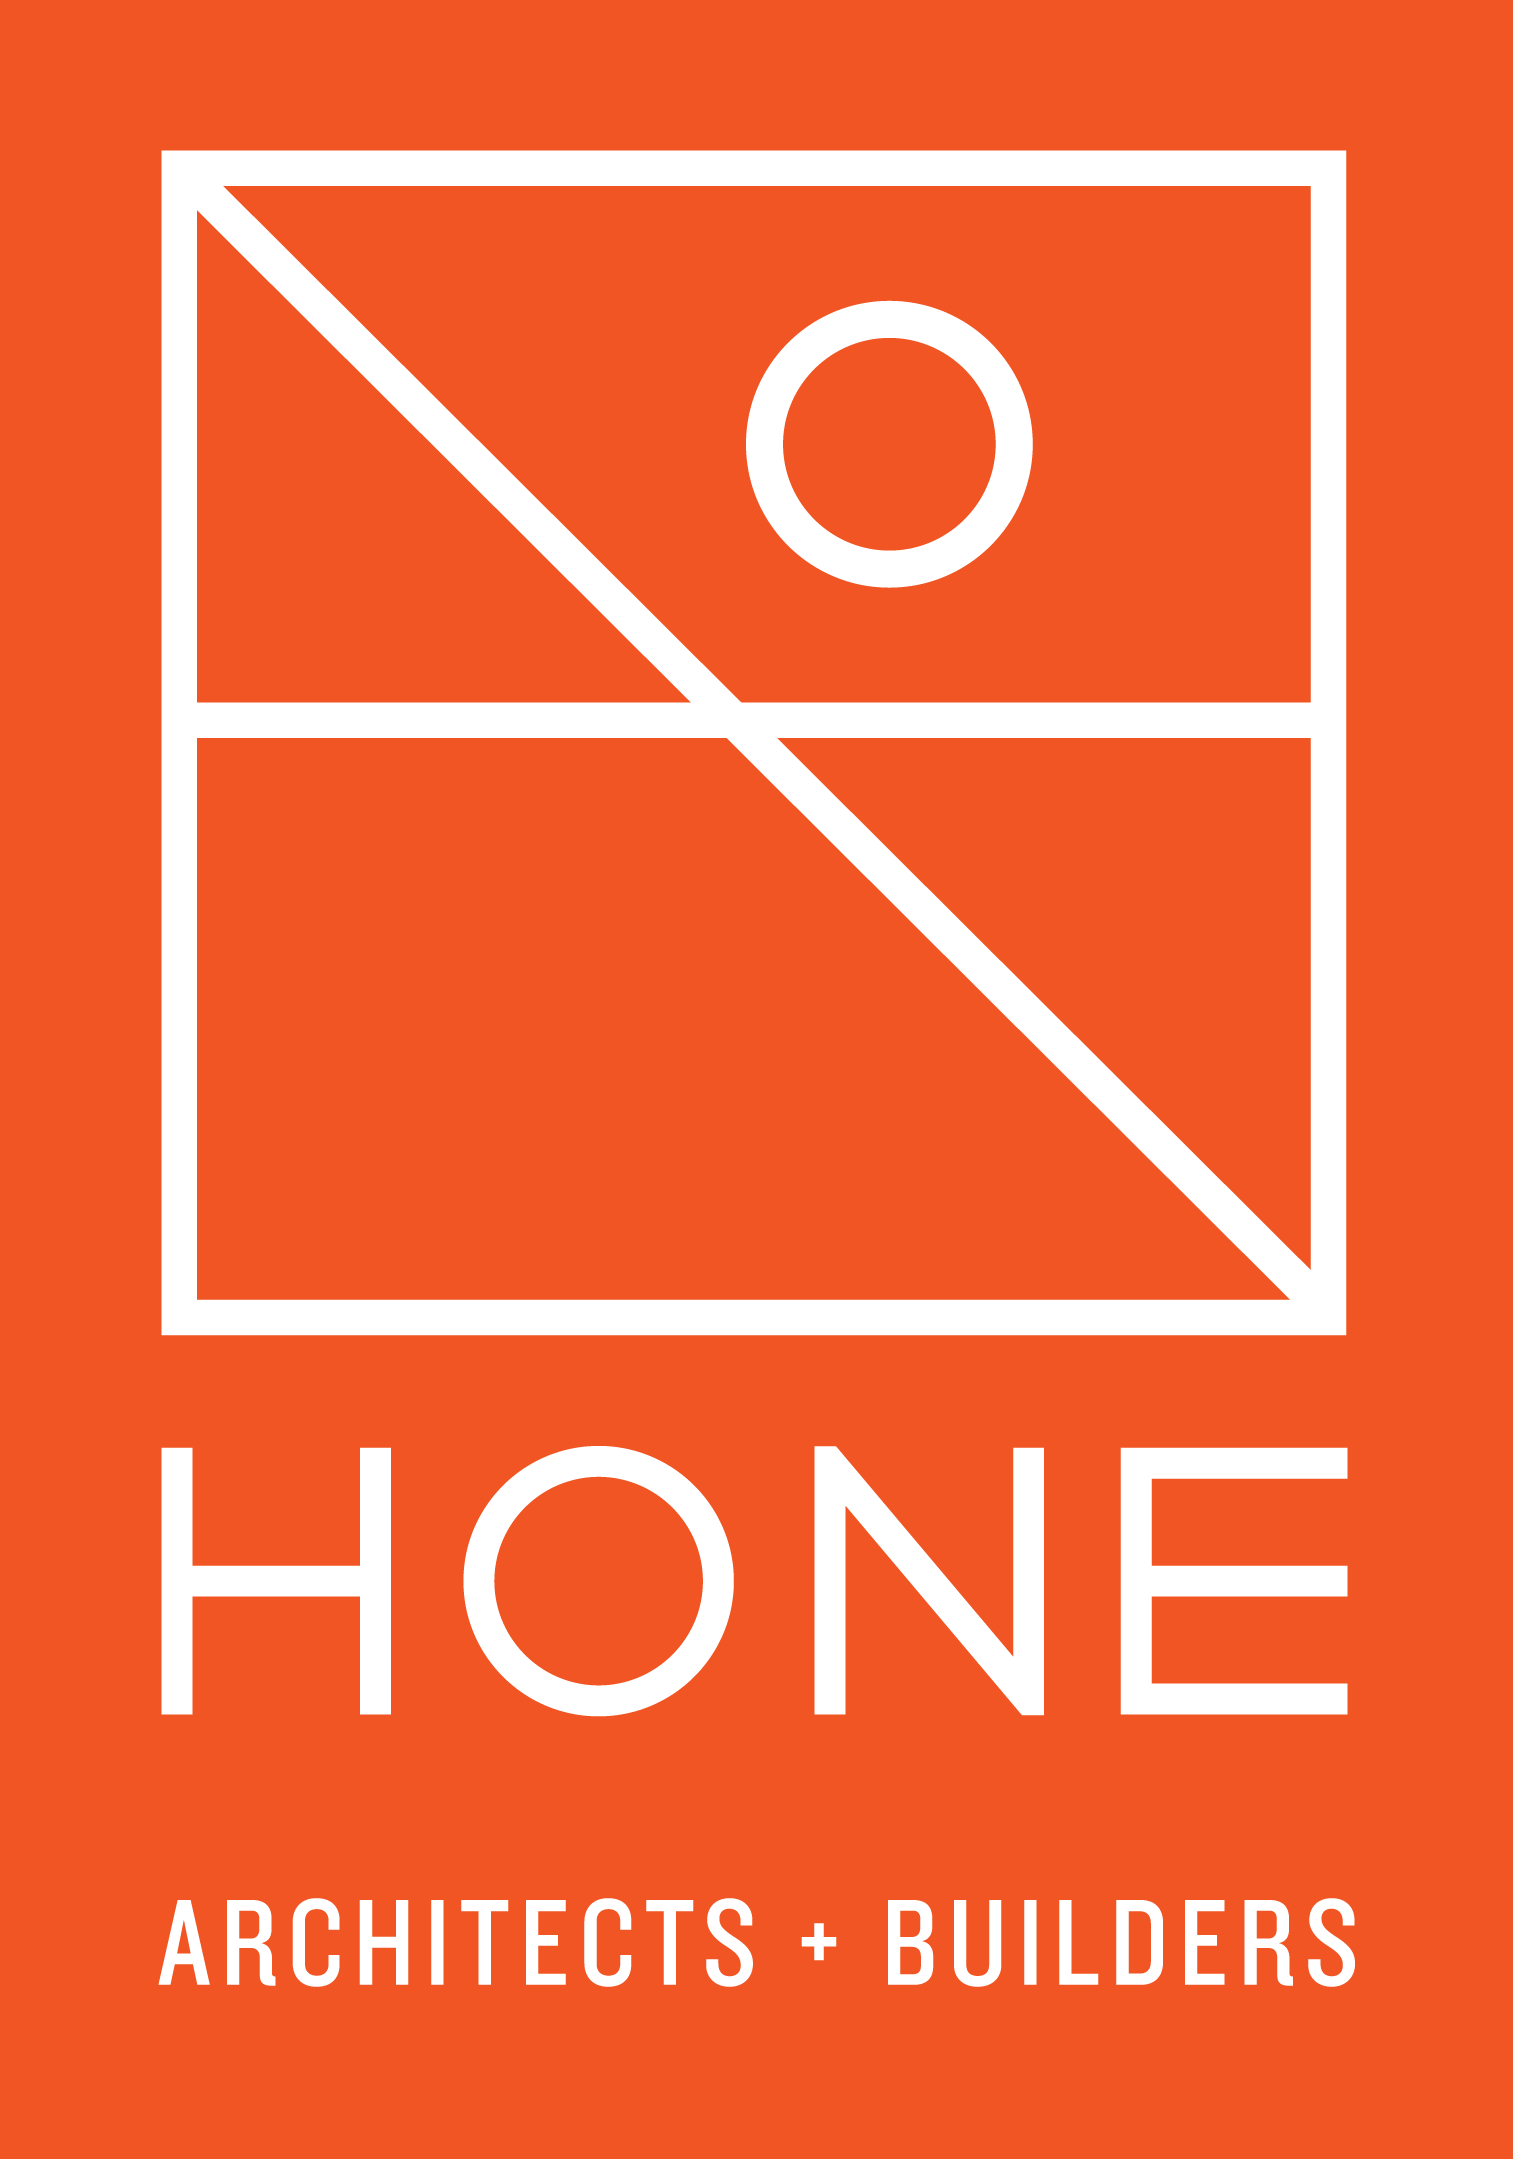 Hone Architects + Builders company logo